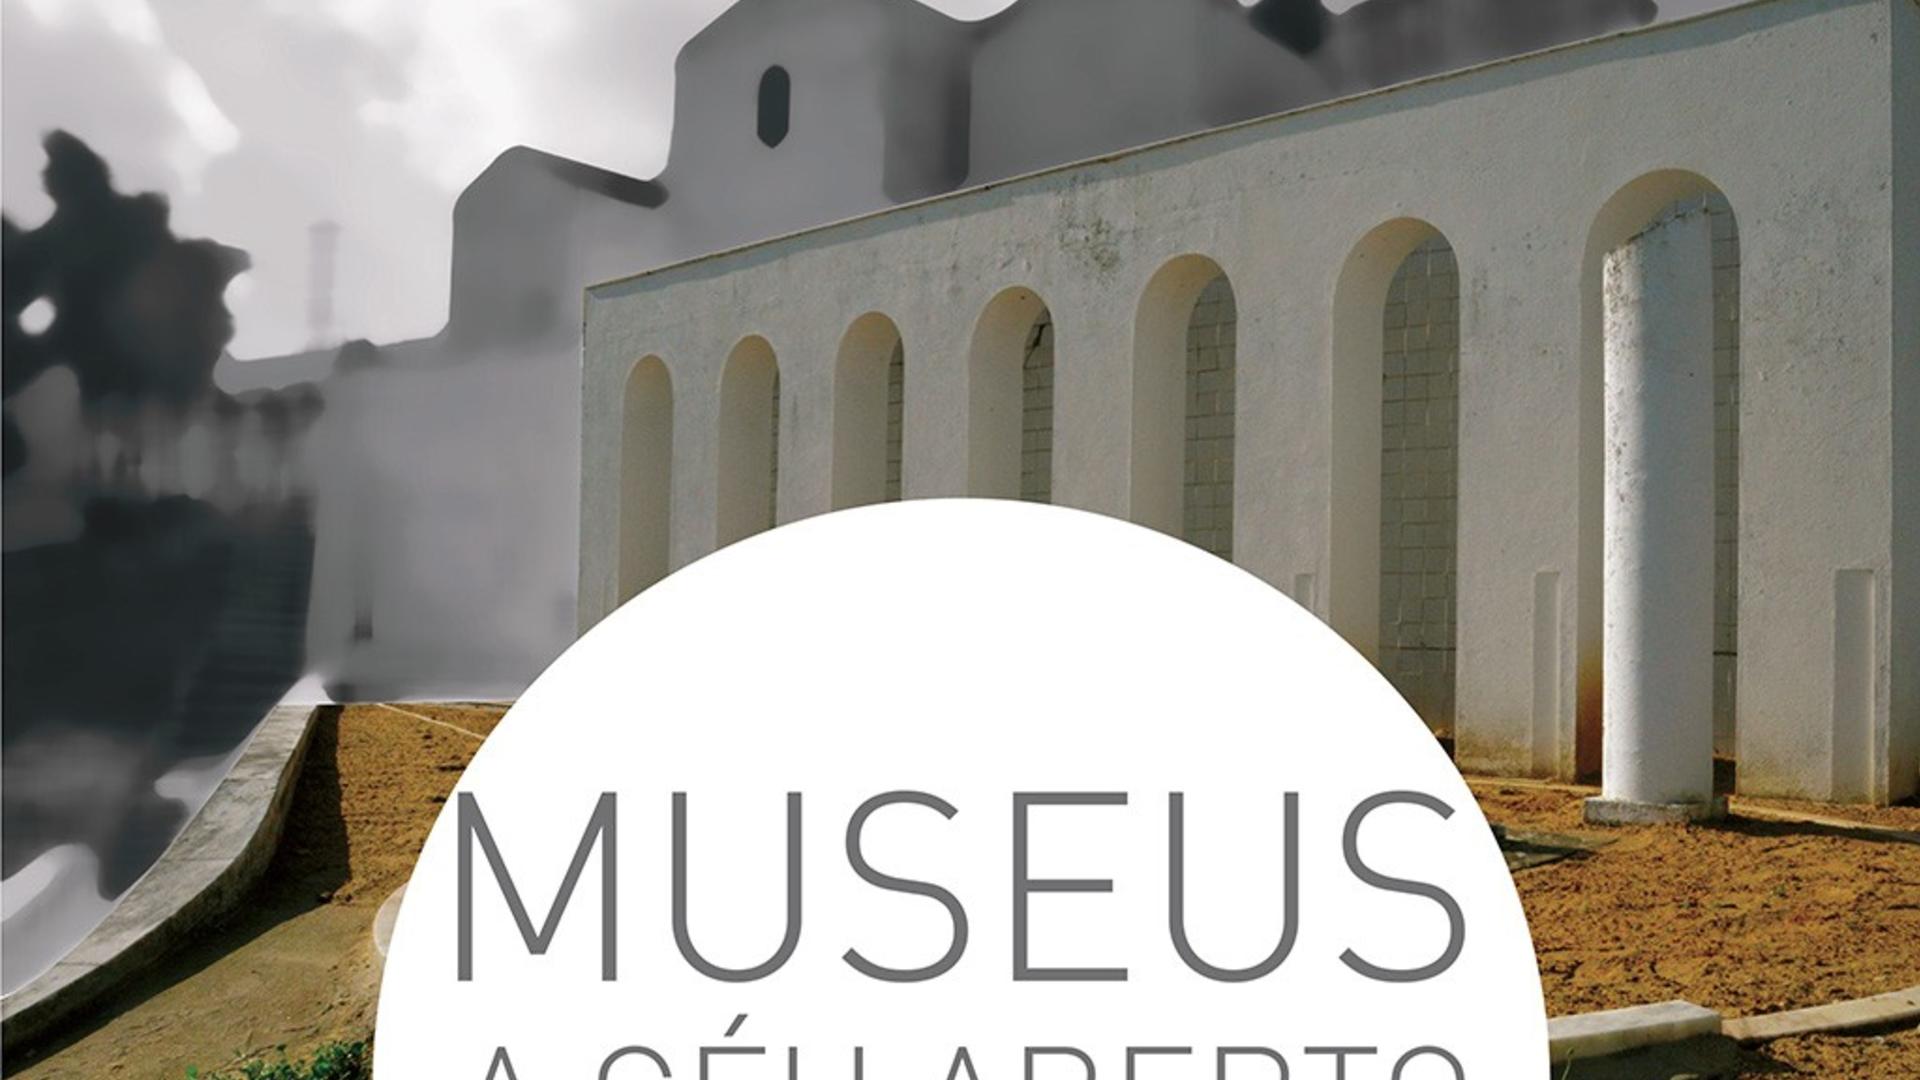 museus_ceu_aberto_flyer